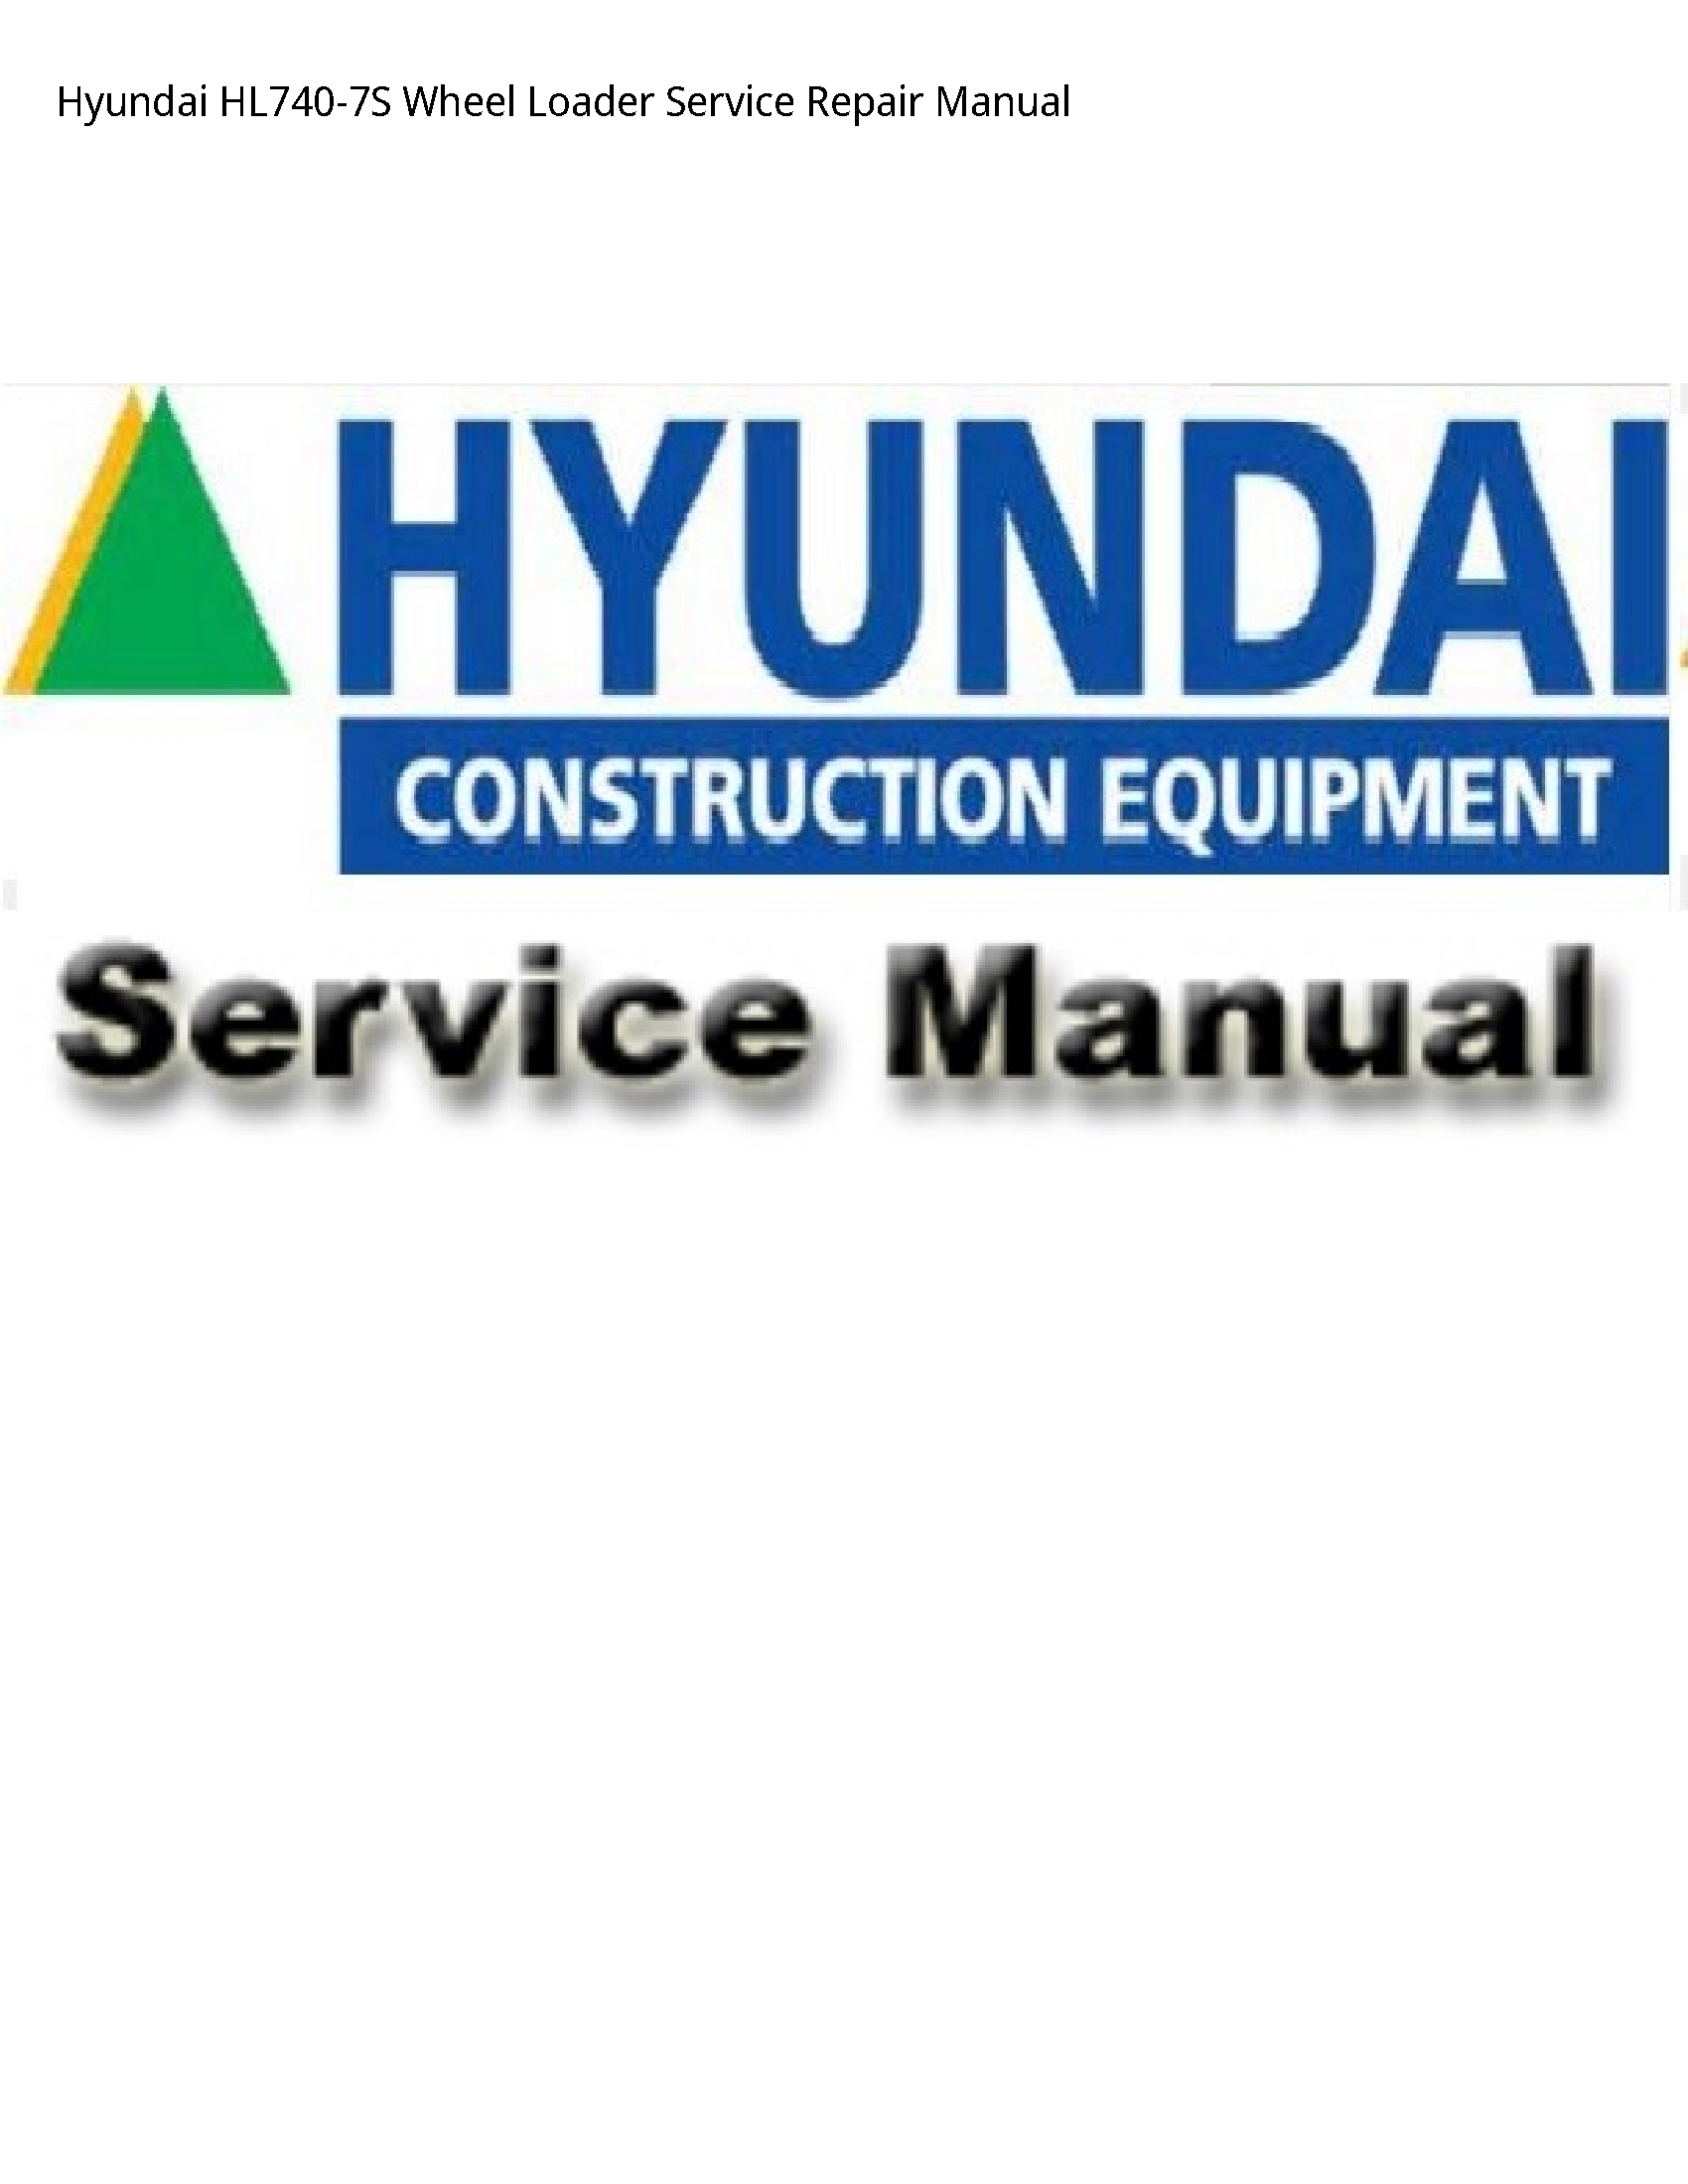 Hyundai HL740-7S Wheel Loader manual